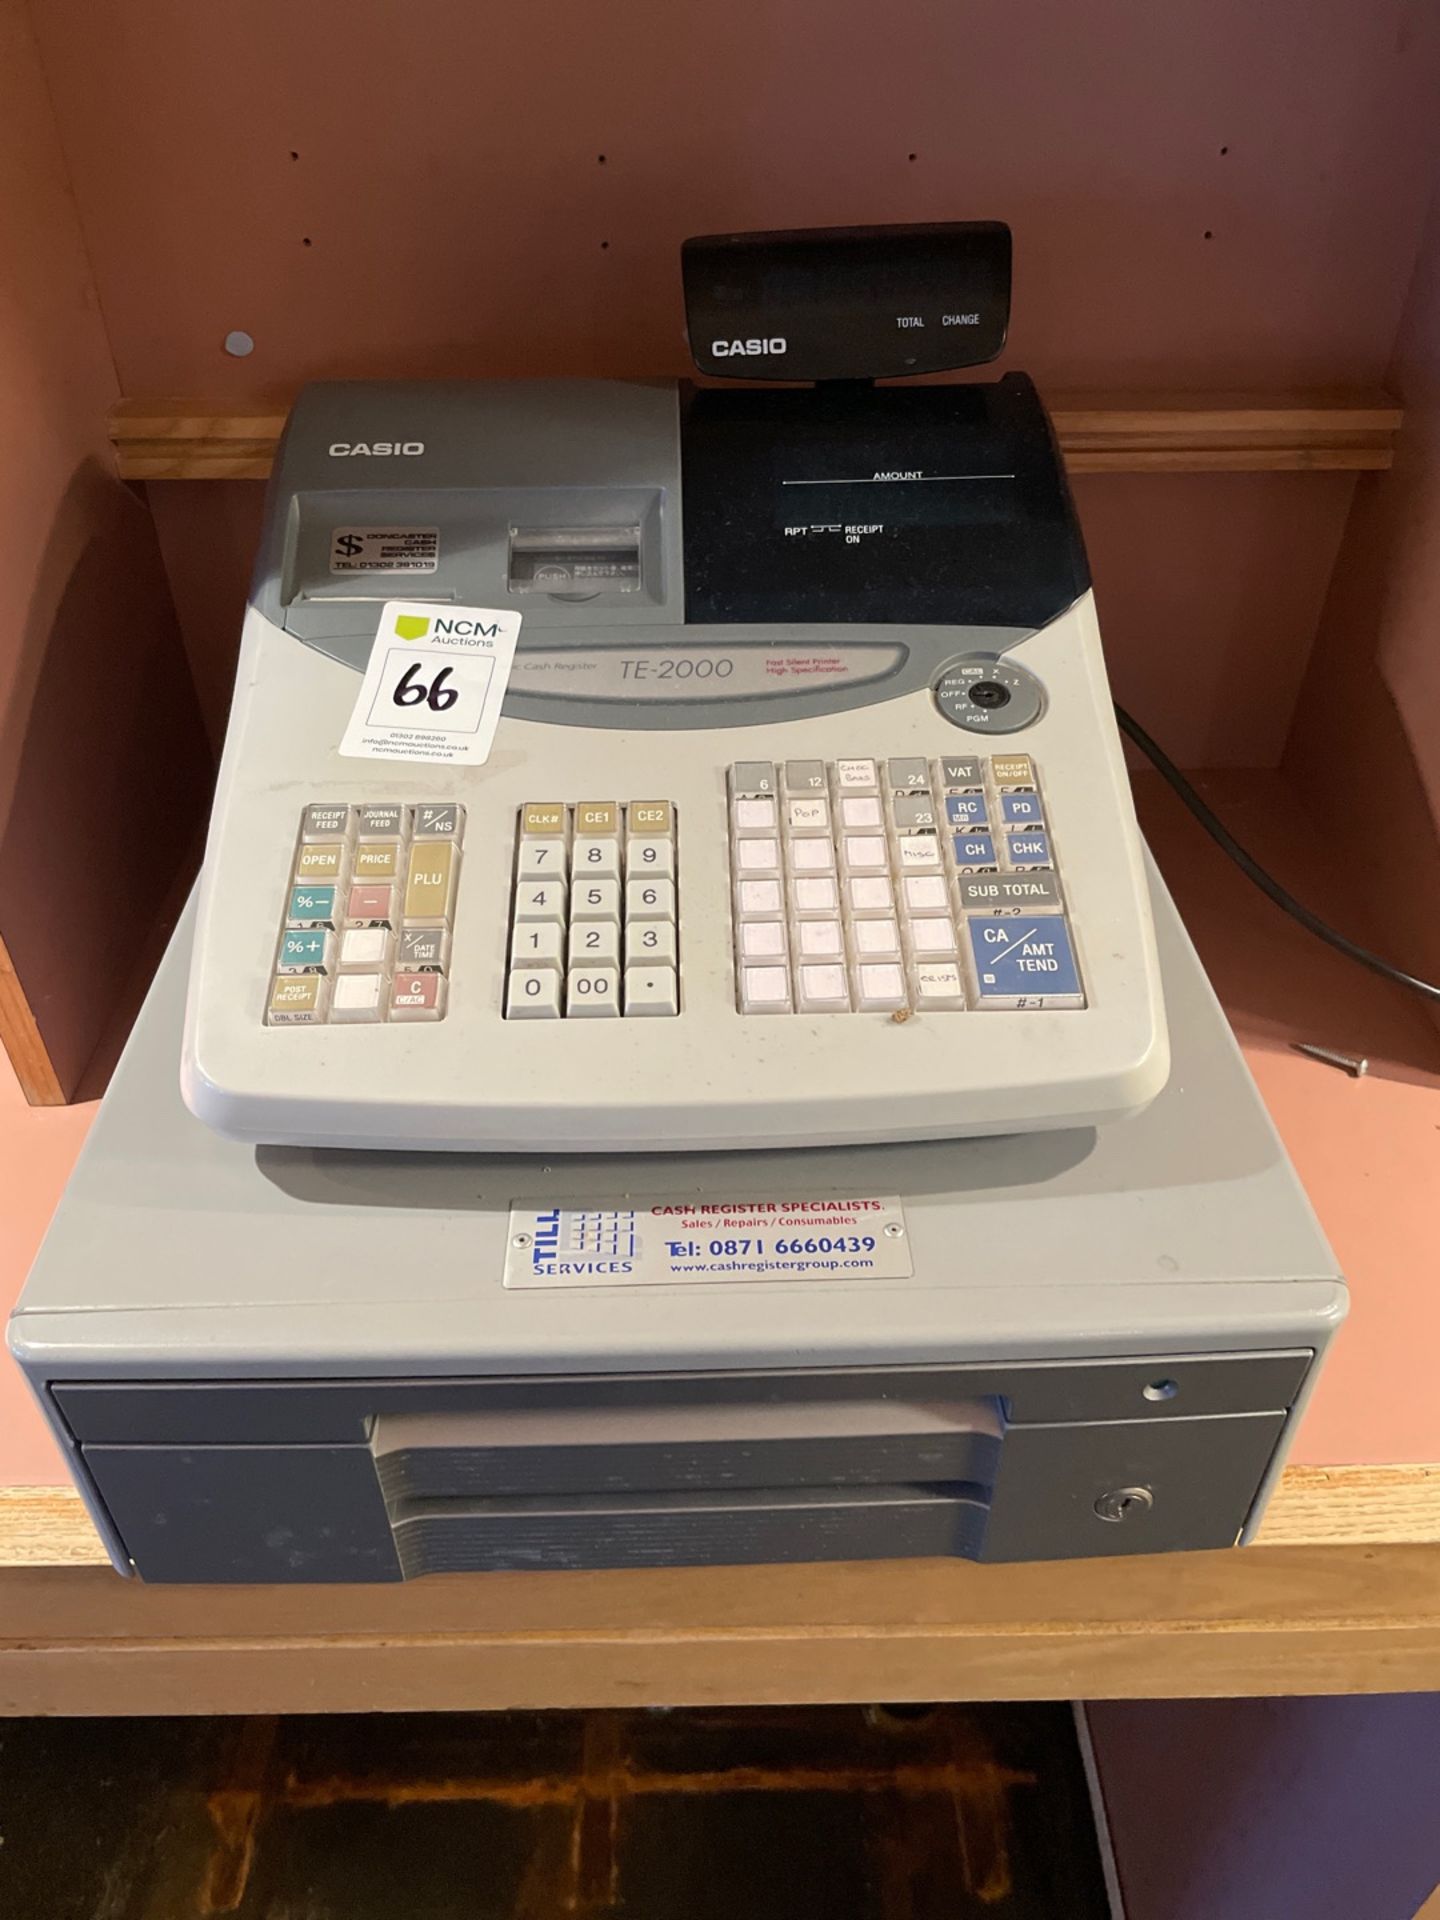 Casio TE-2000 Electronic Cash Register